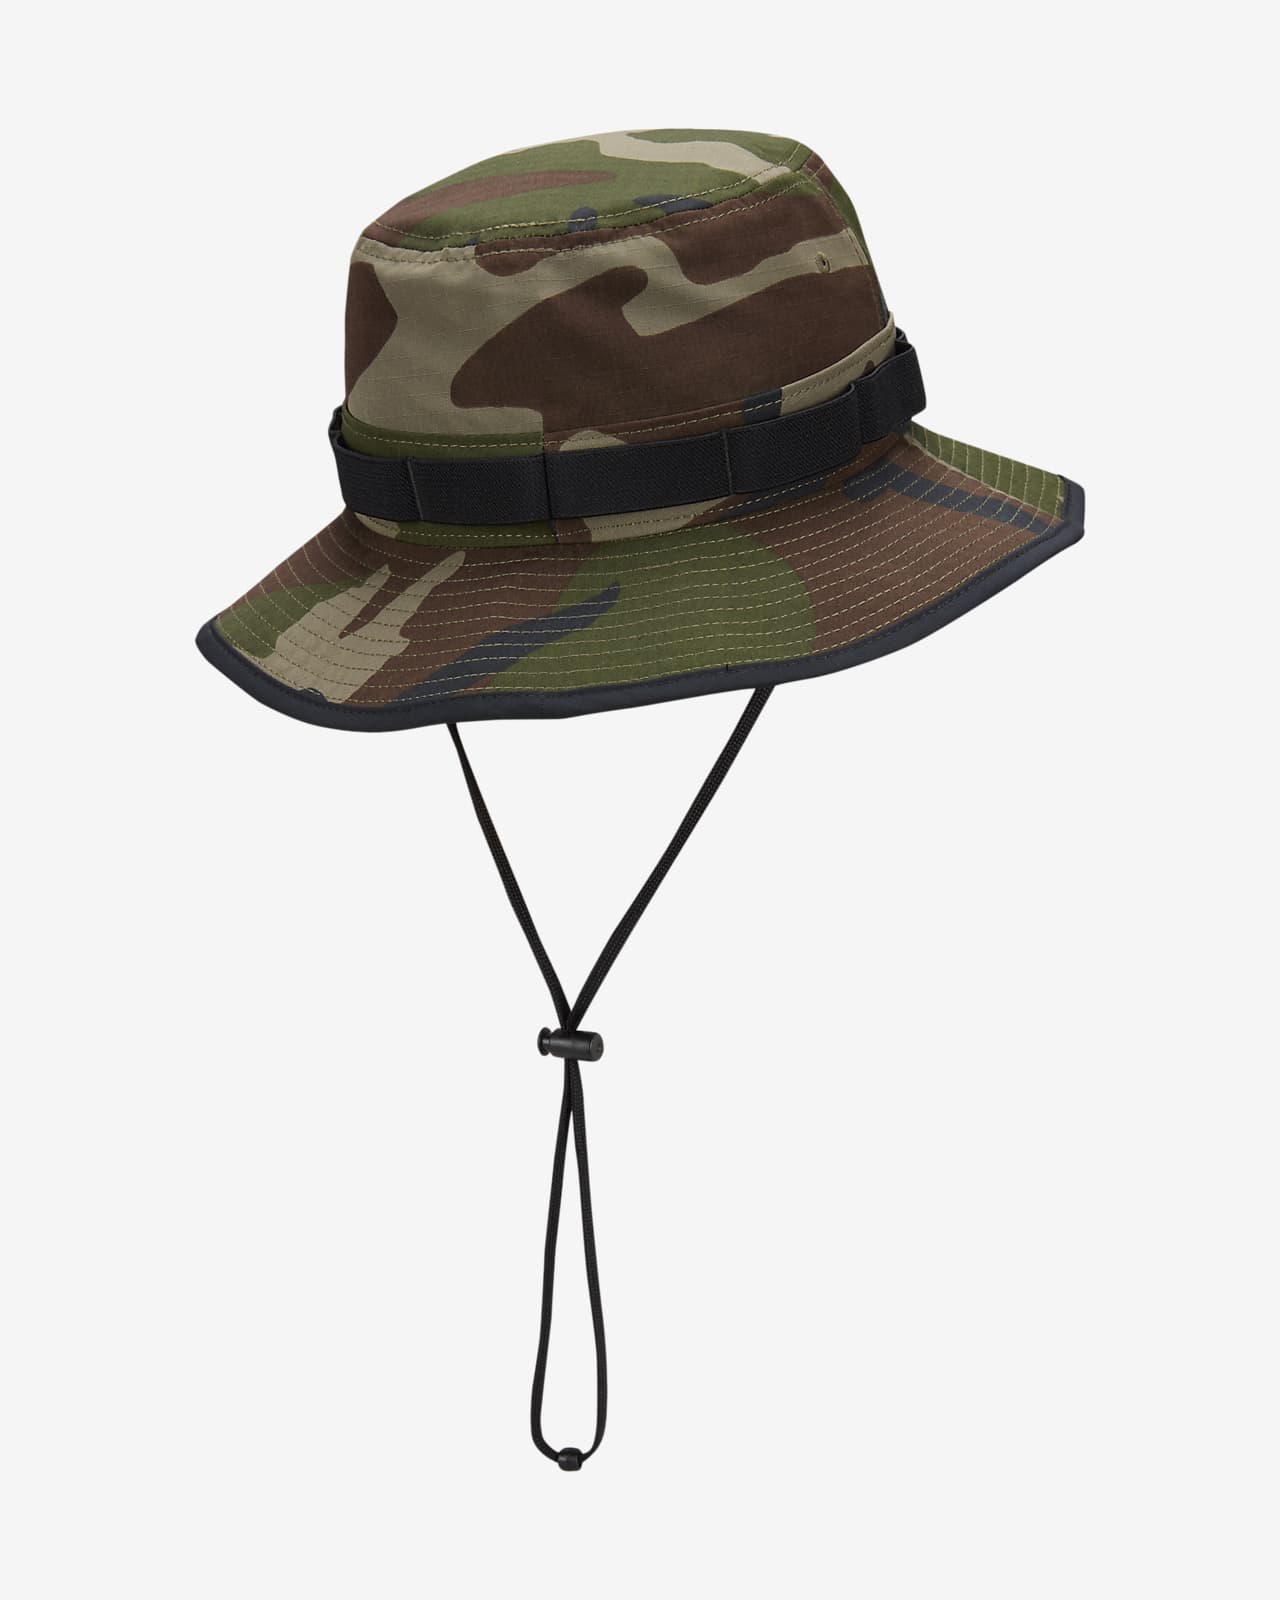  Camo Bucket Hat